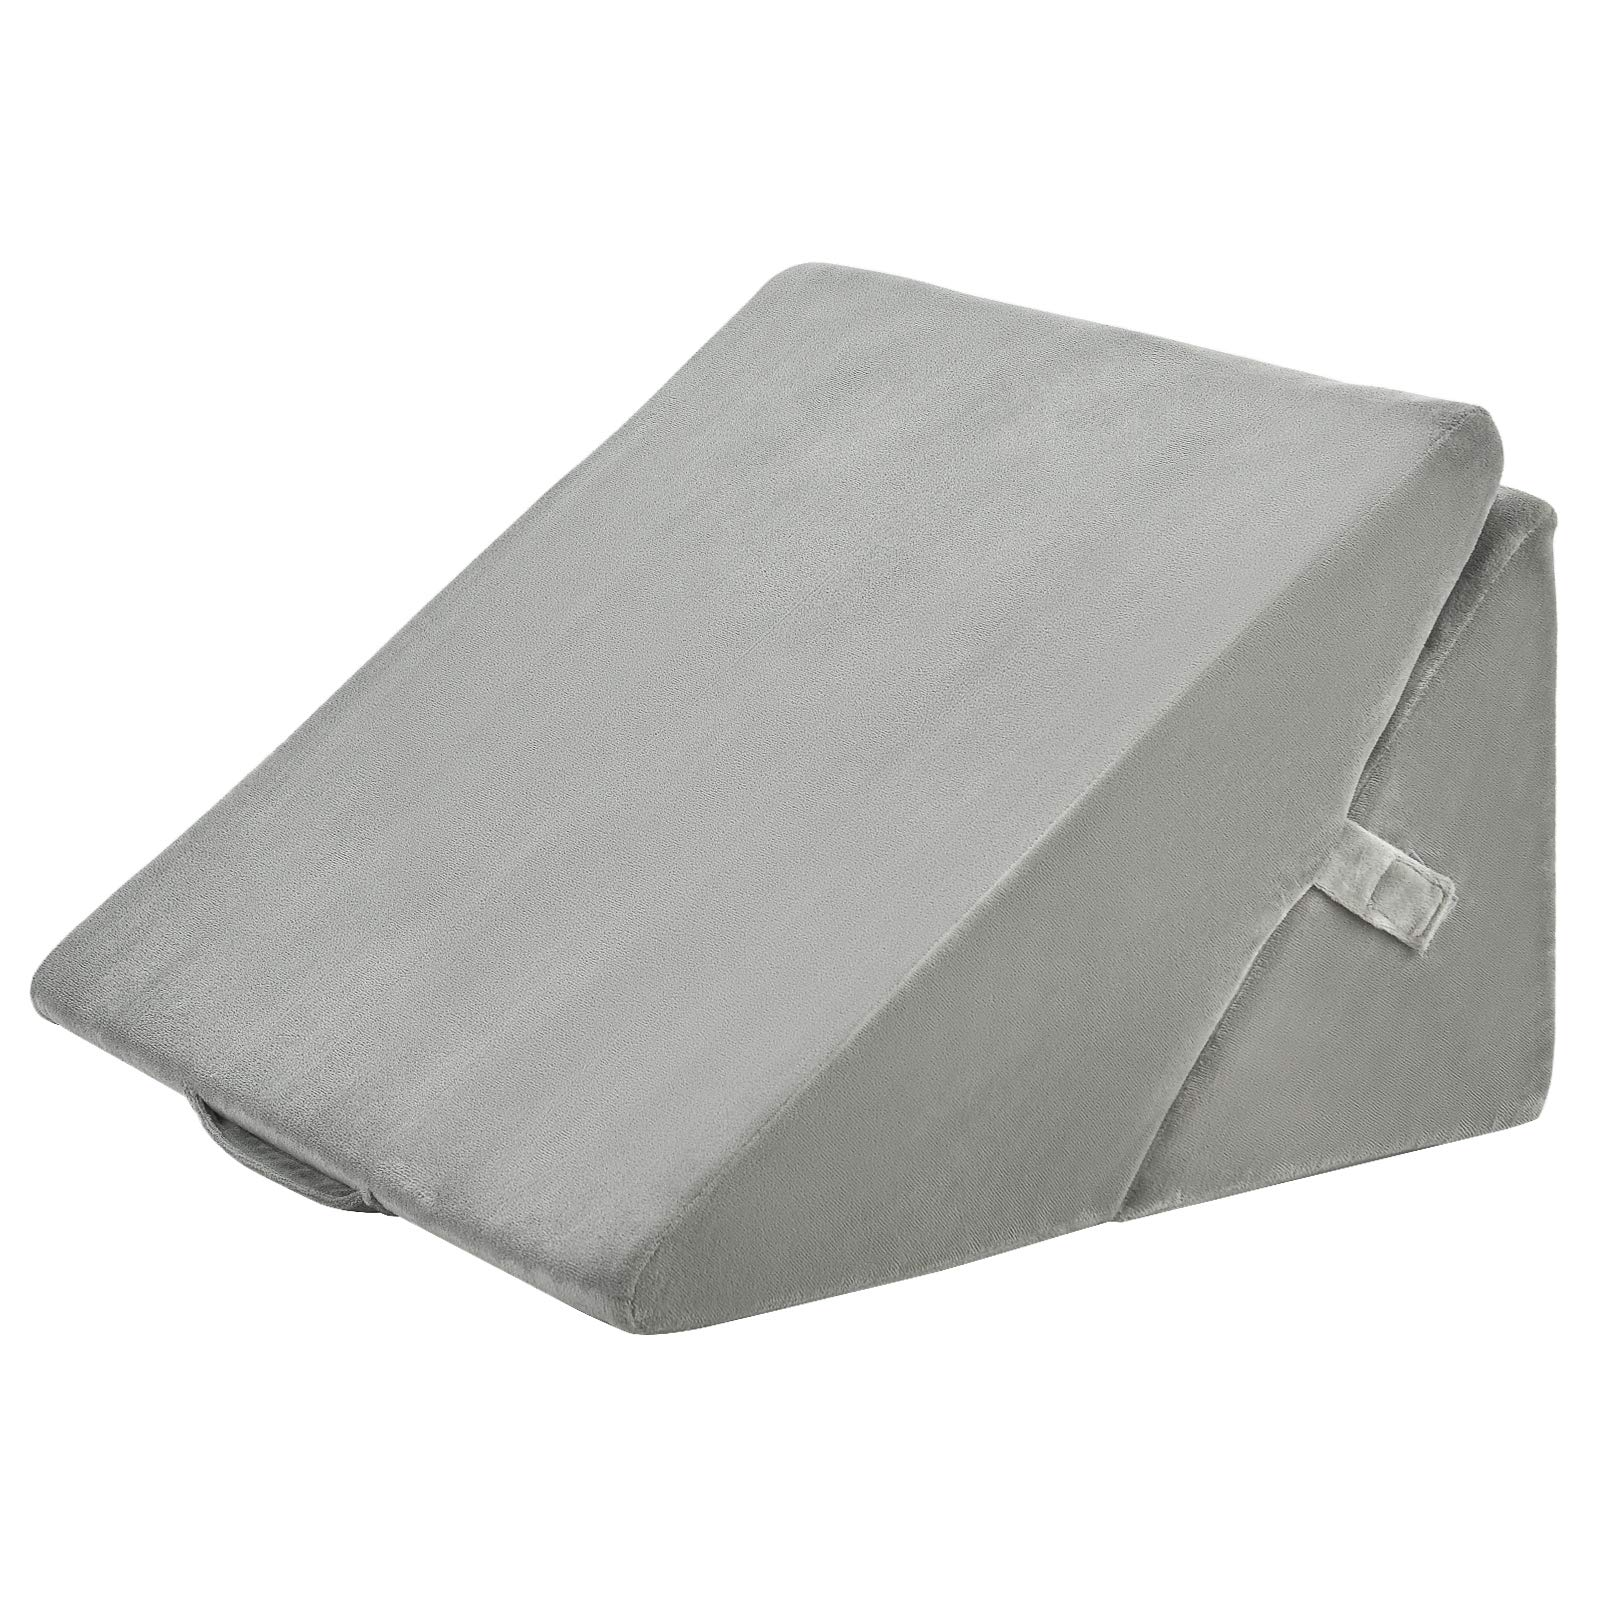 Giantex Bed Wedge Pillow, Adjustable 9&12 Inch